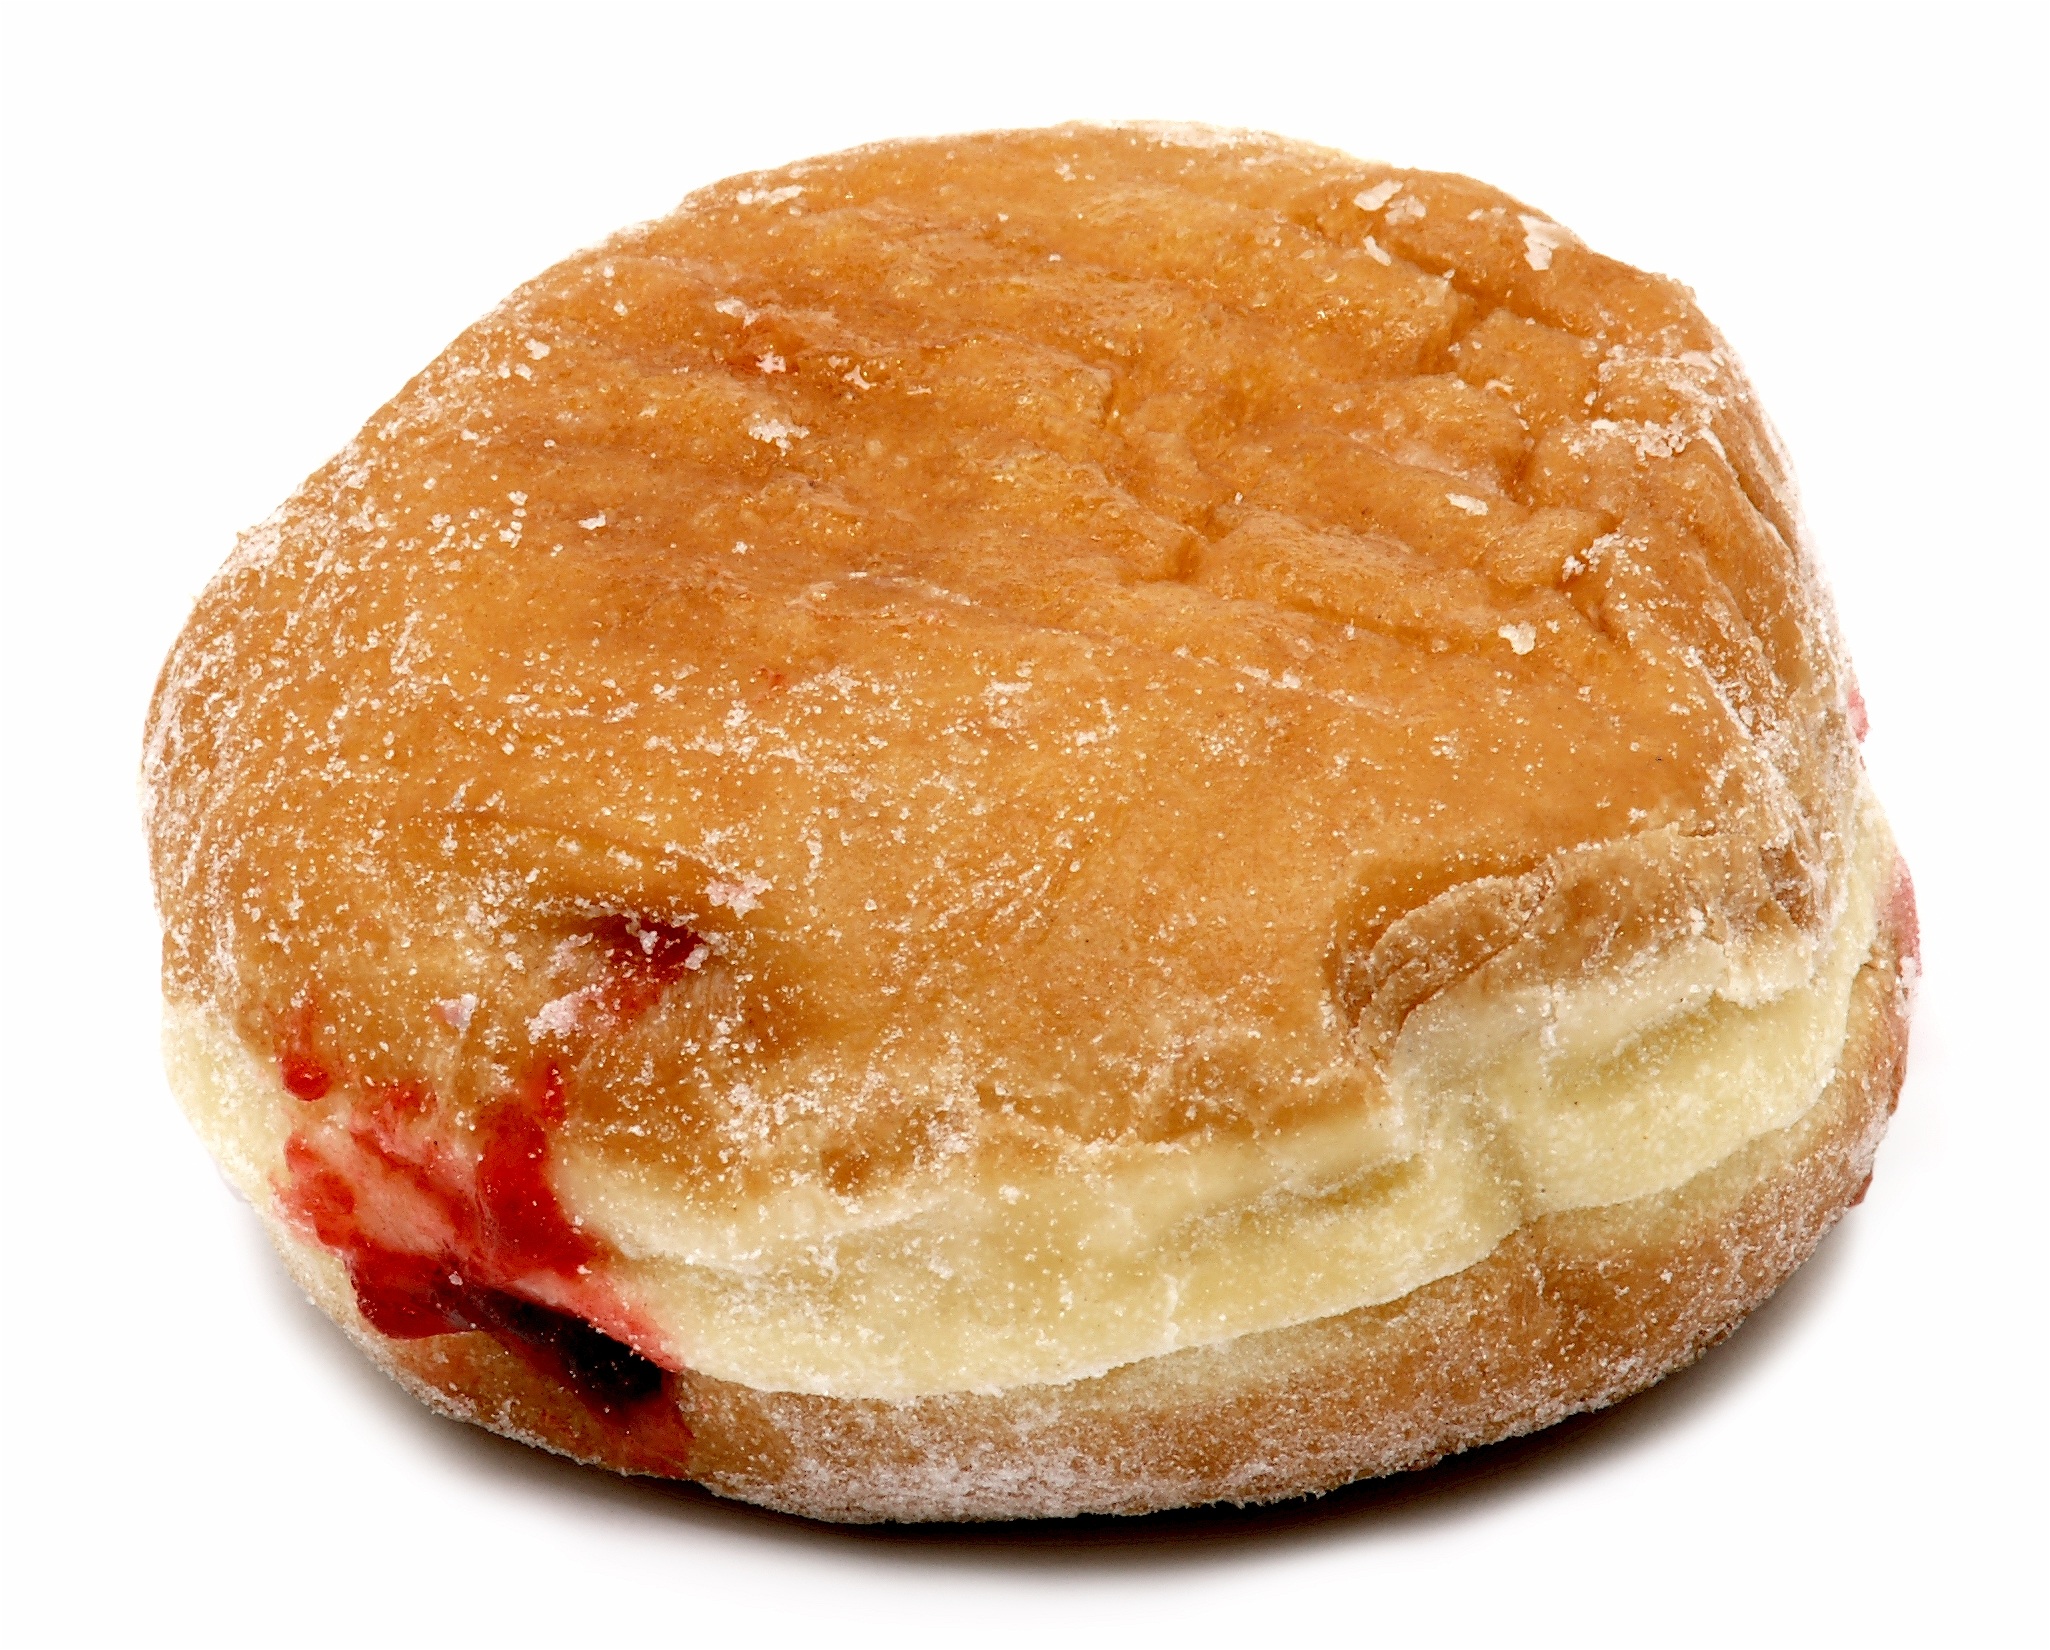 Baked donut photo